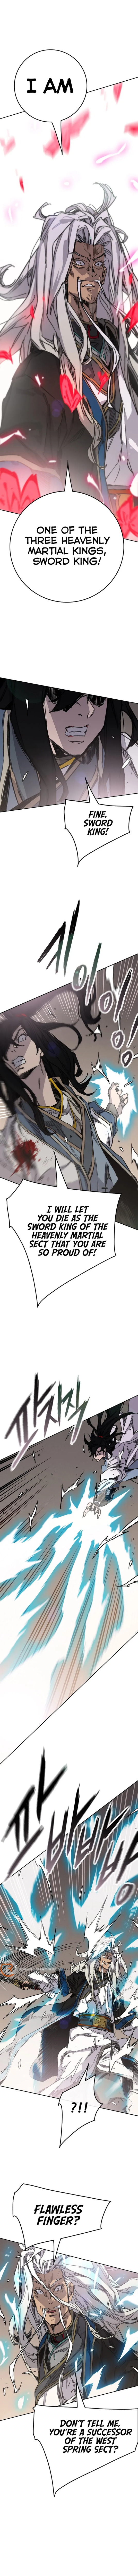 The Undefeatable Swordsman chapter 188